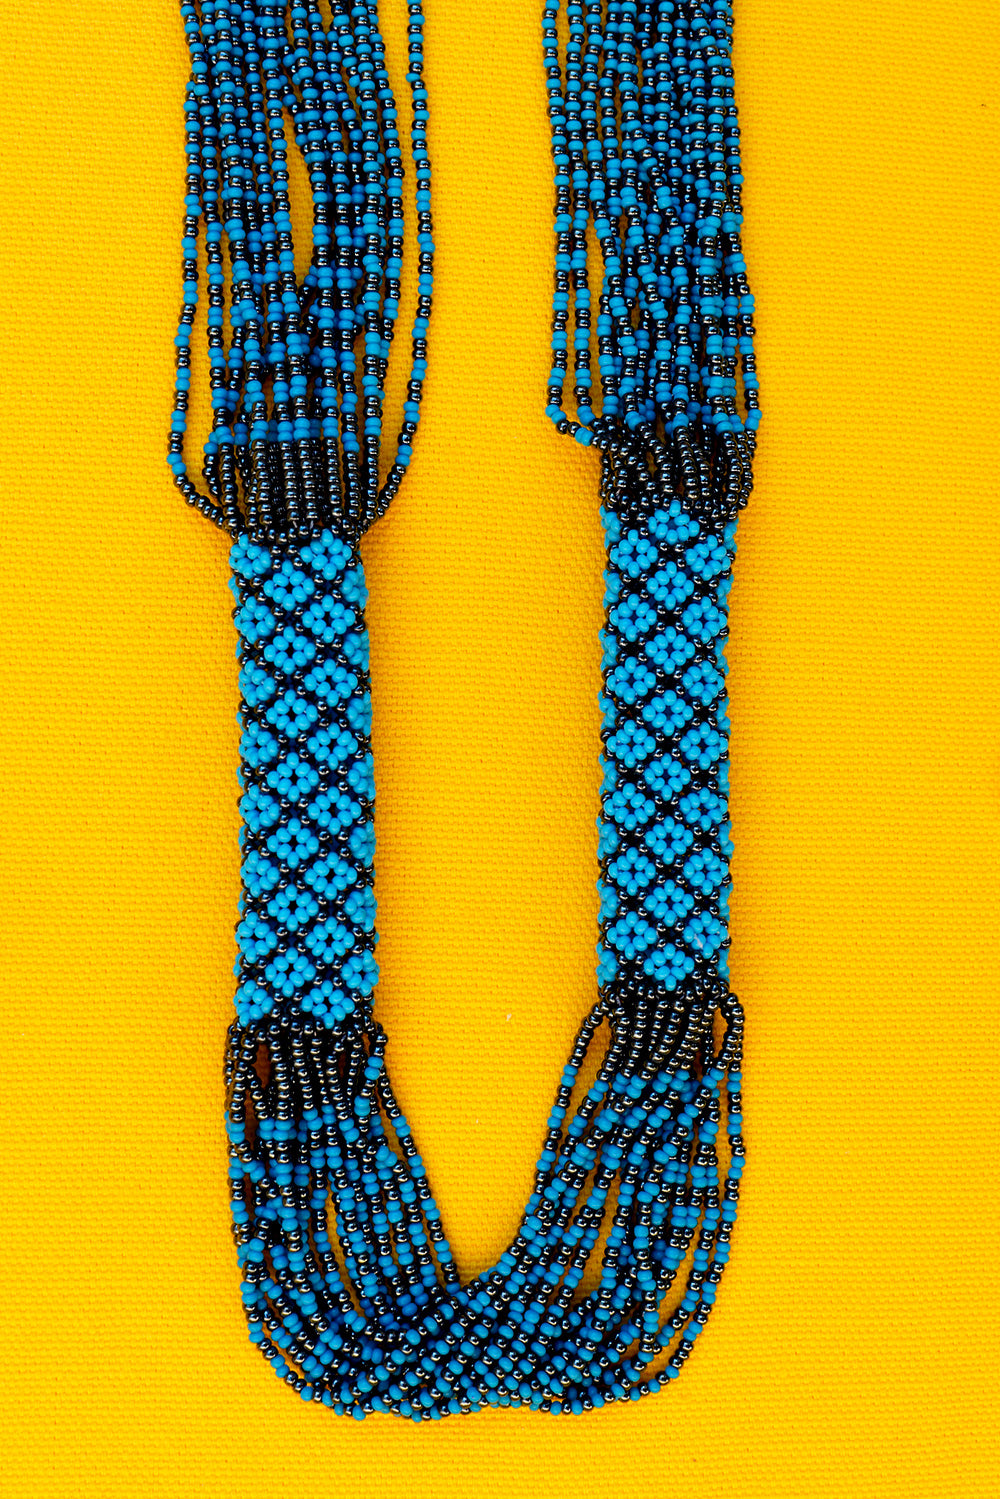 18 Wholesale Mexican Huichol Beaded Necklaces Unique Statement Jewellery - ARTMEXICO